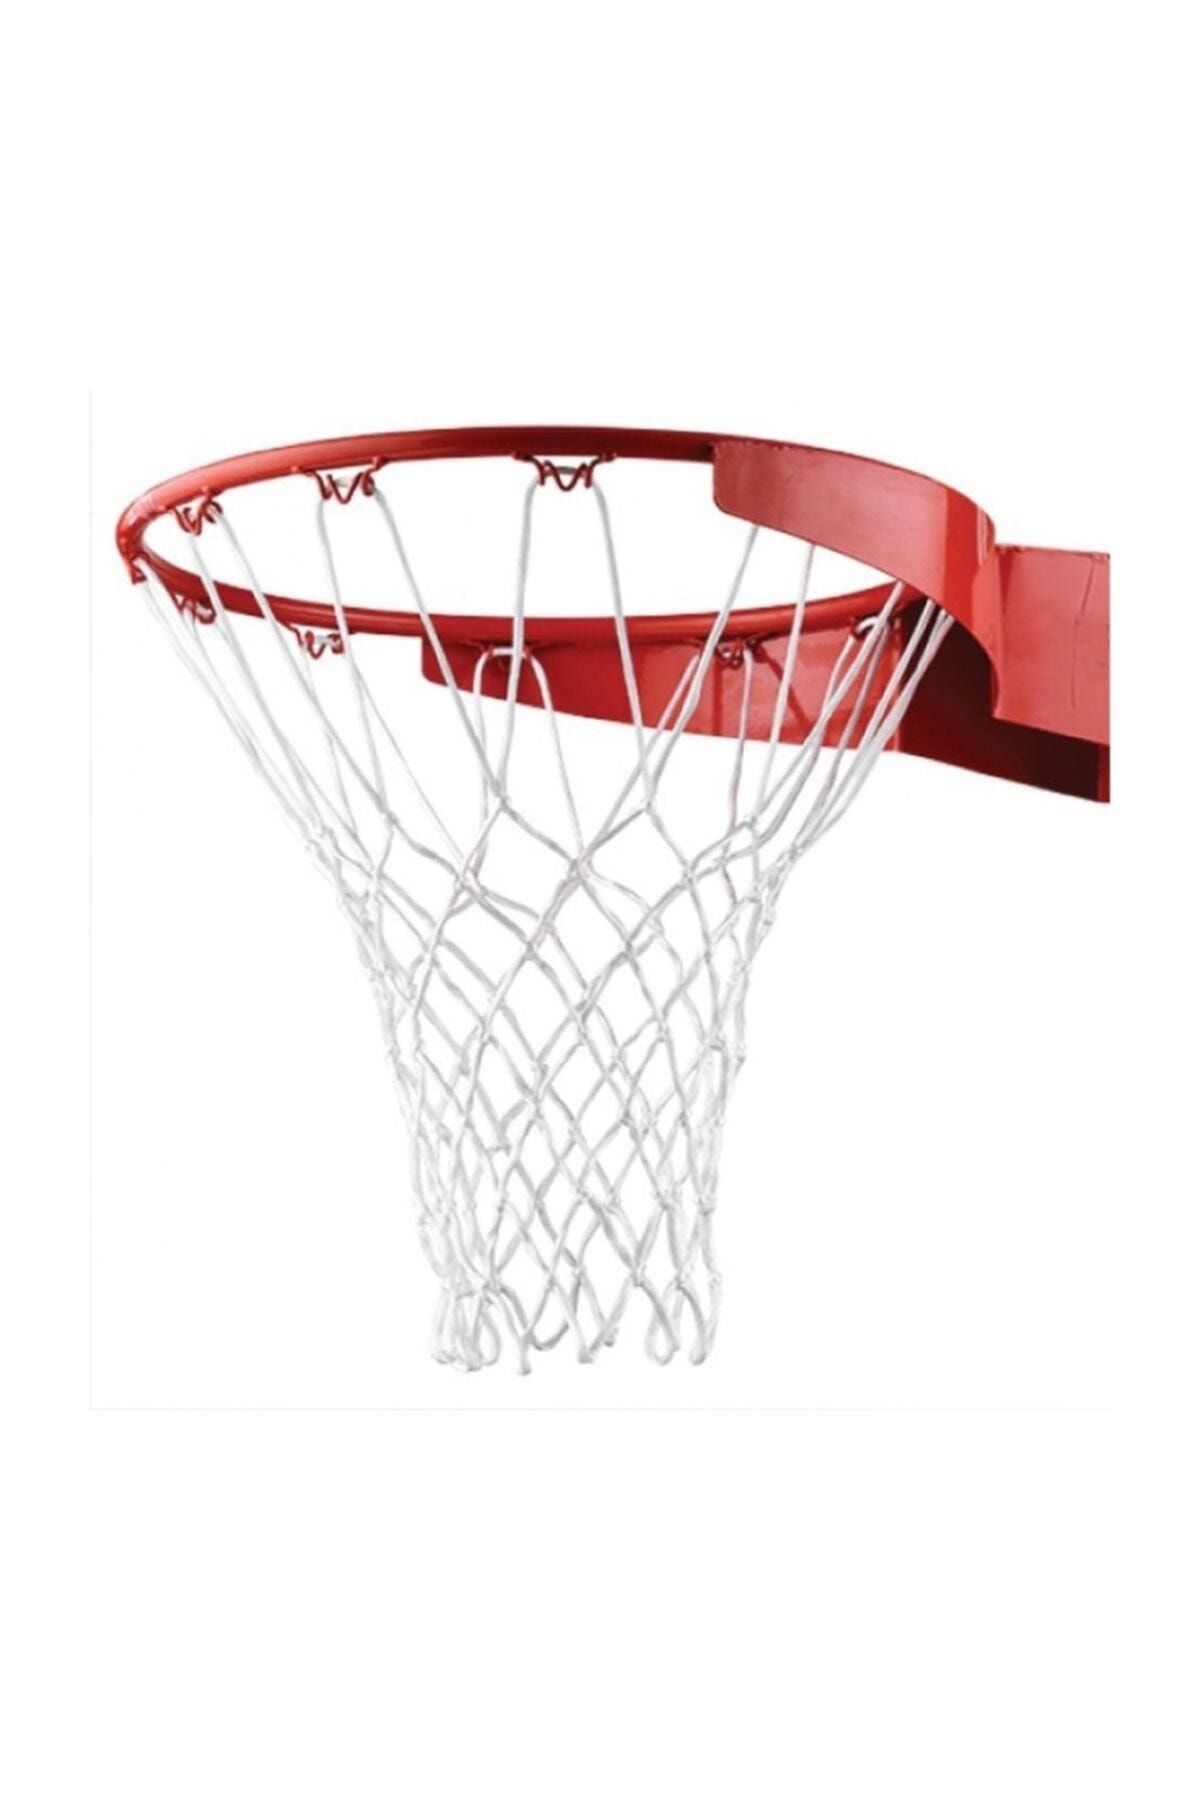 Avessa Basketbol Filesi, Basketbol Pota Filesi Nizami - 4mm 4x4 Cm